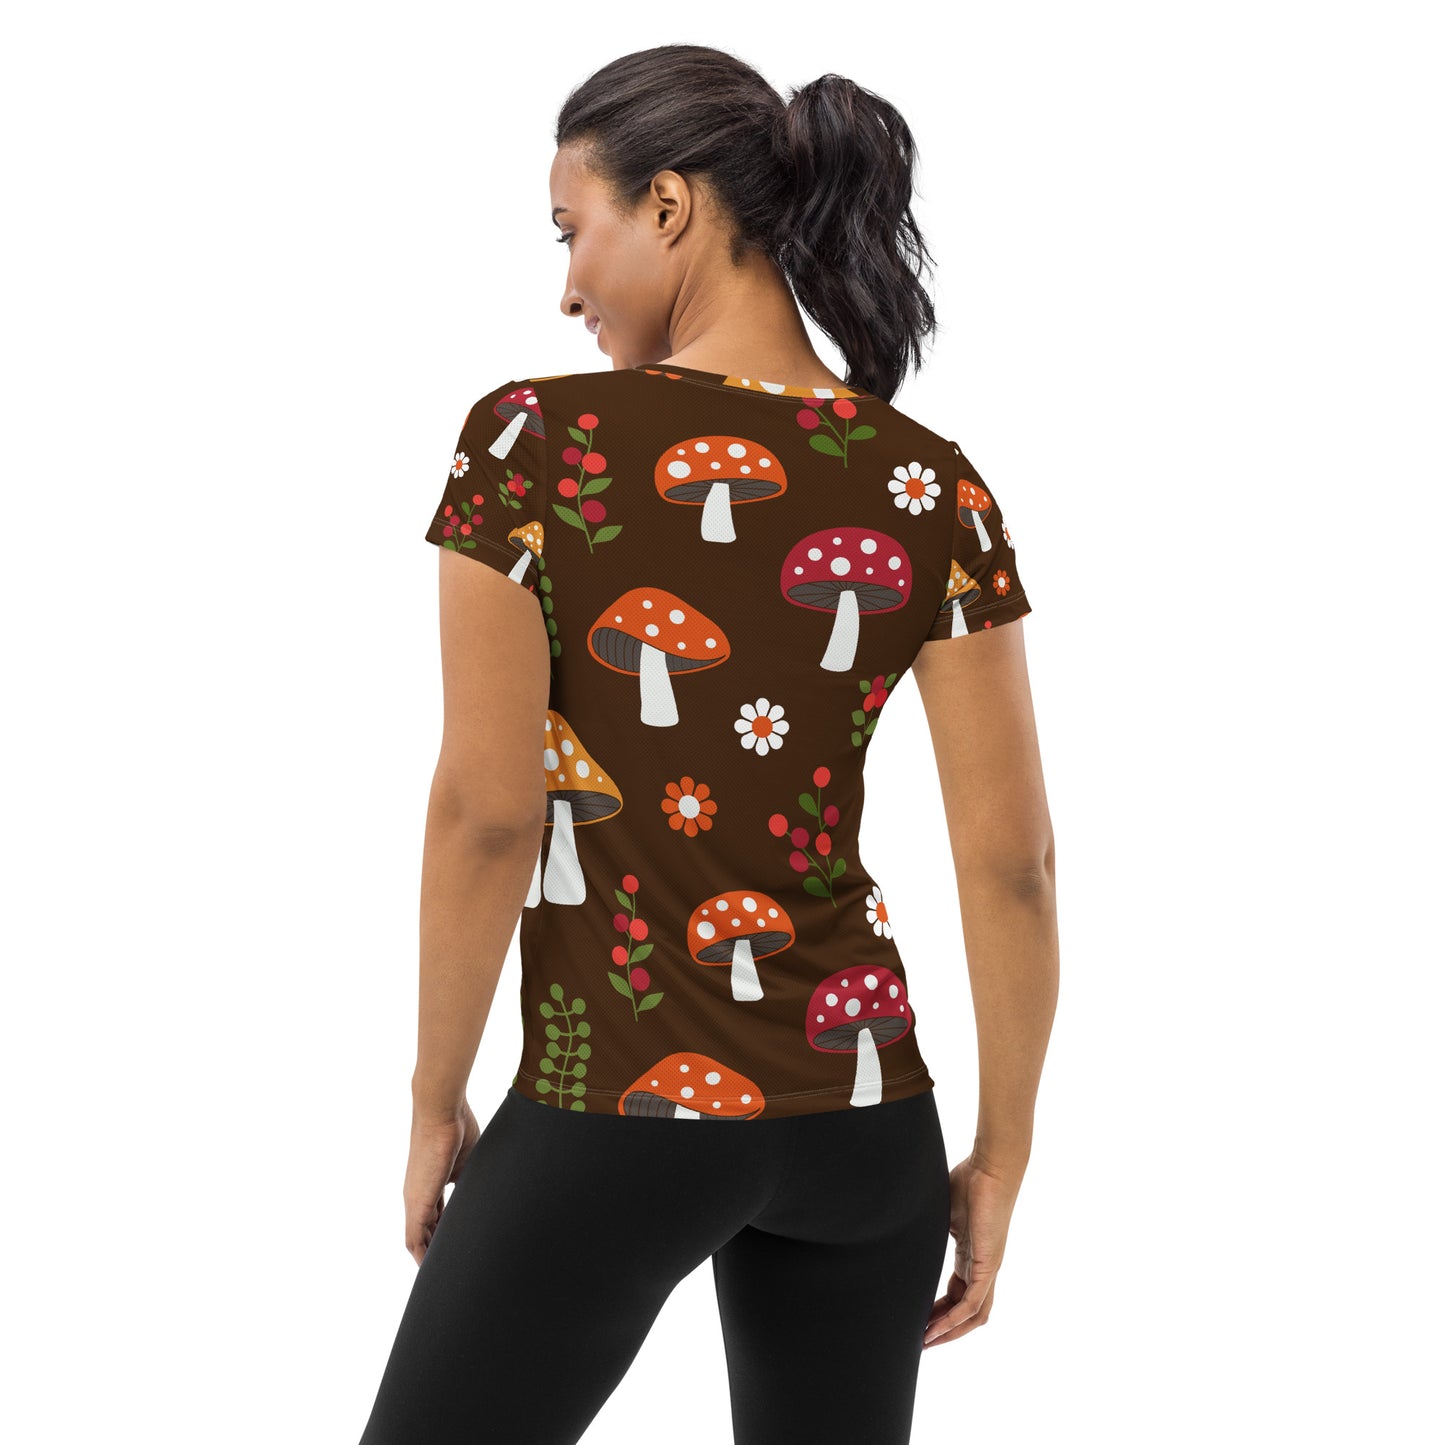 "Mushroom" women's t-shirt (elastic)